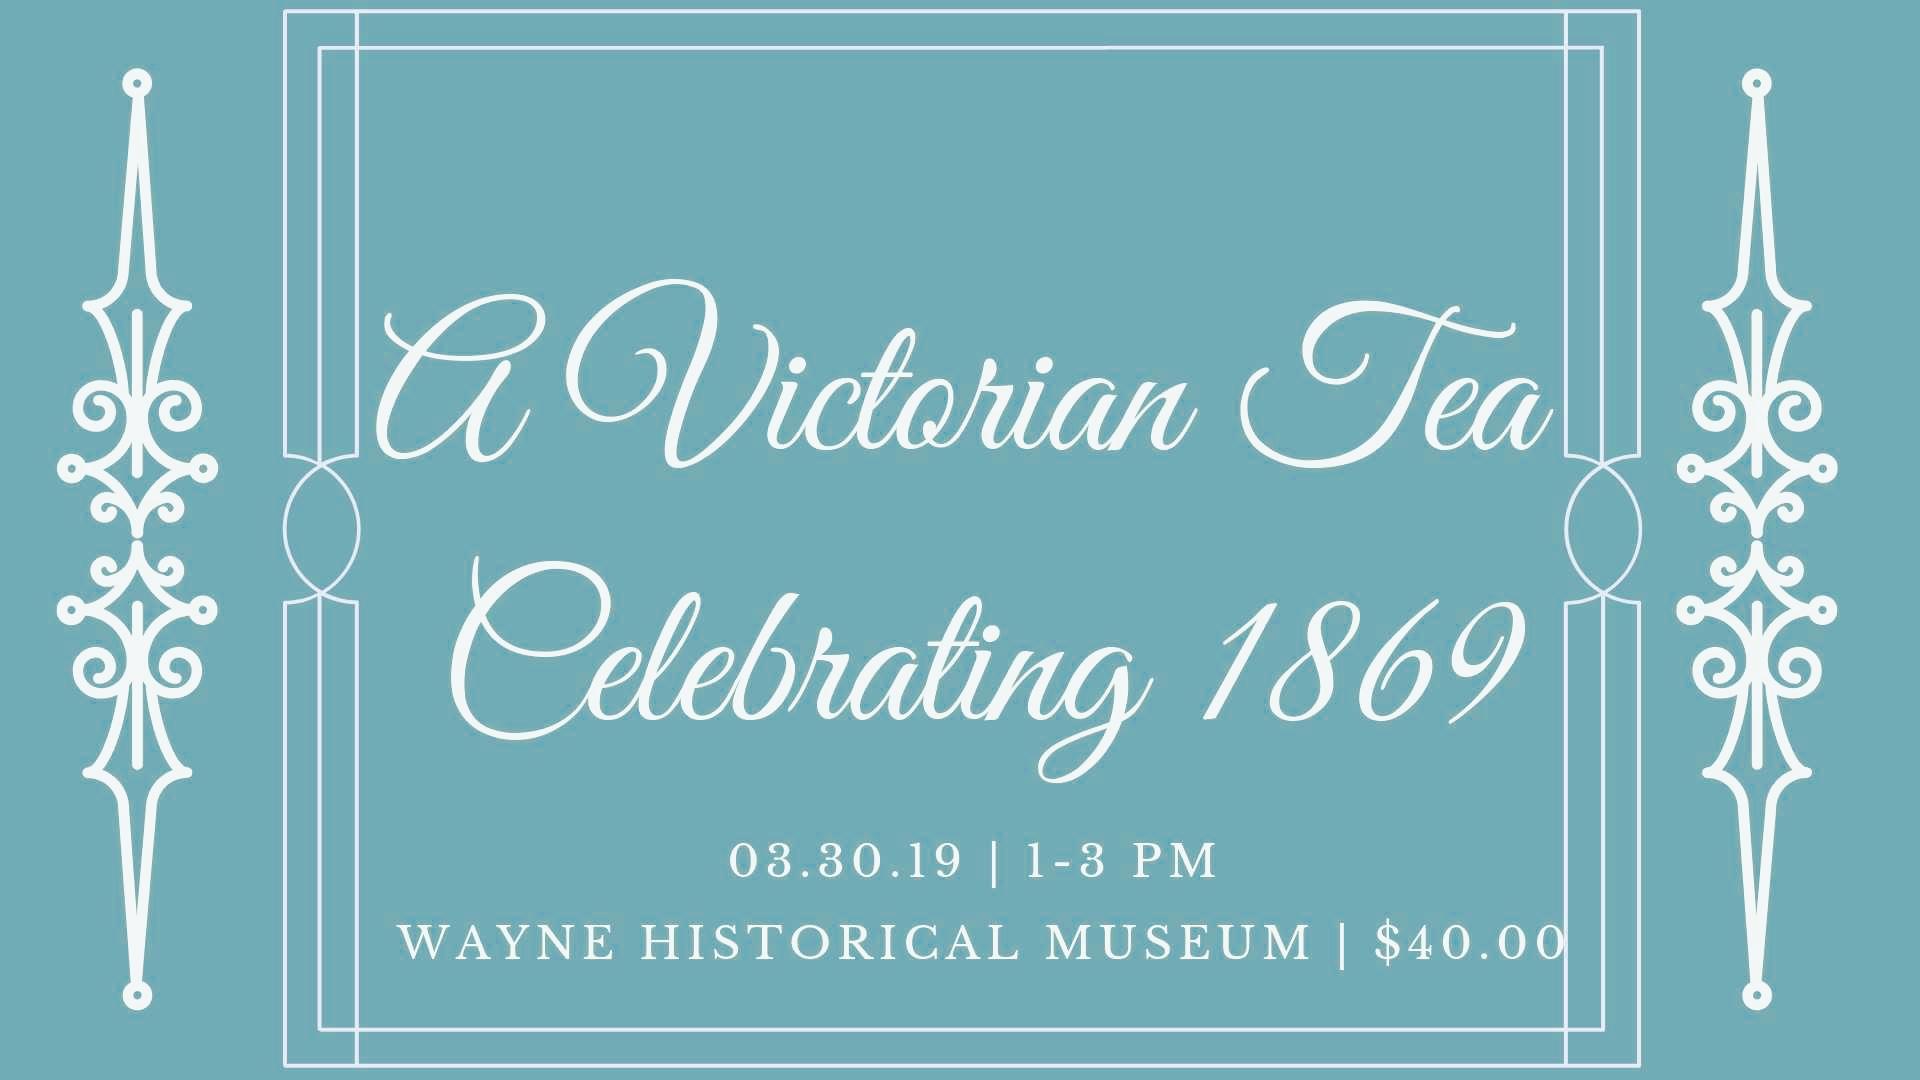 City of Wayne Sesquicentennial - A Victorian Tea